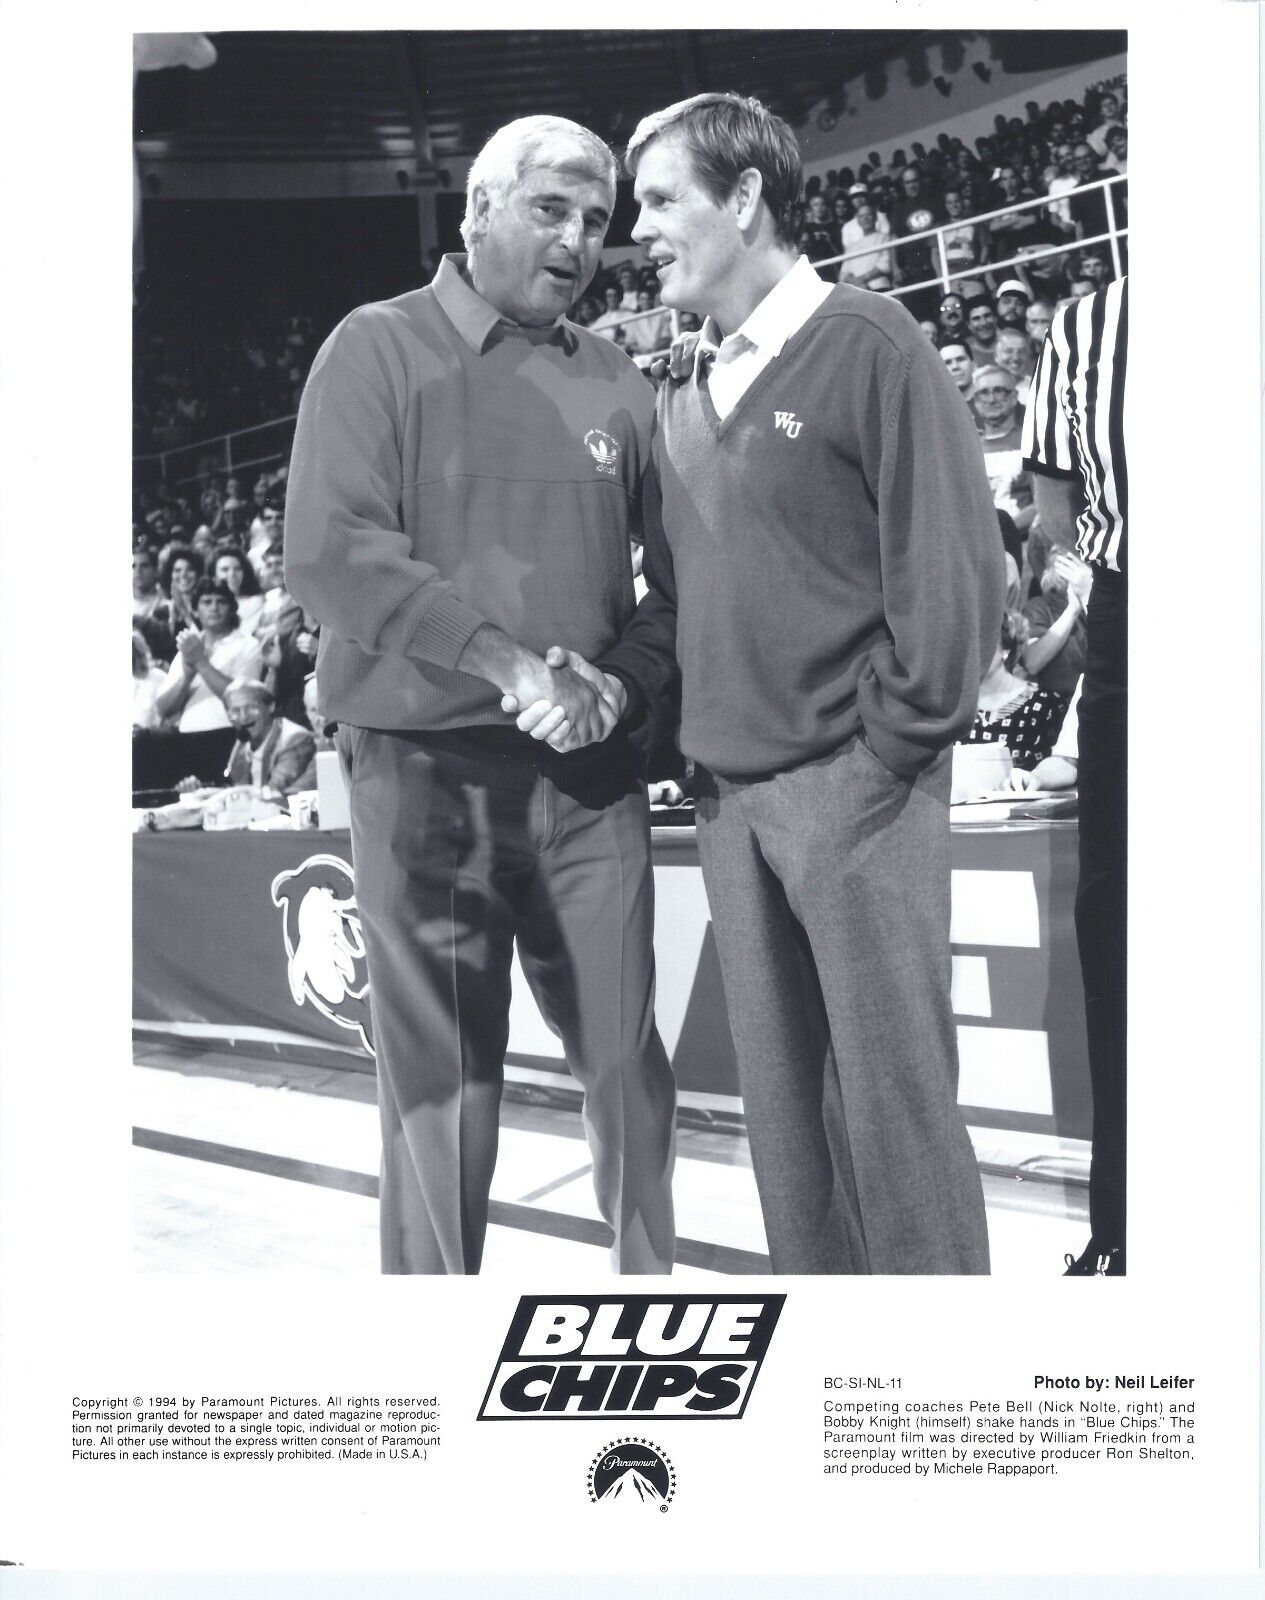 BLUE CHIPS Nick Nolte & Bobby Knight Original 1994 Paramount 8x10 Press Photo